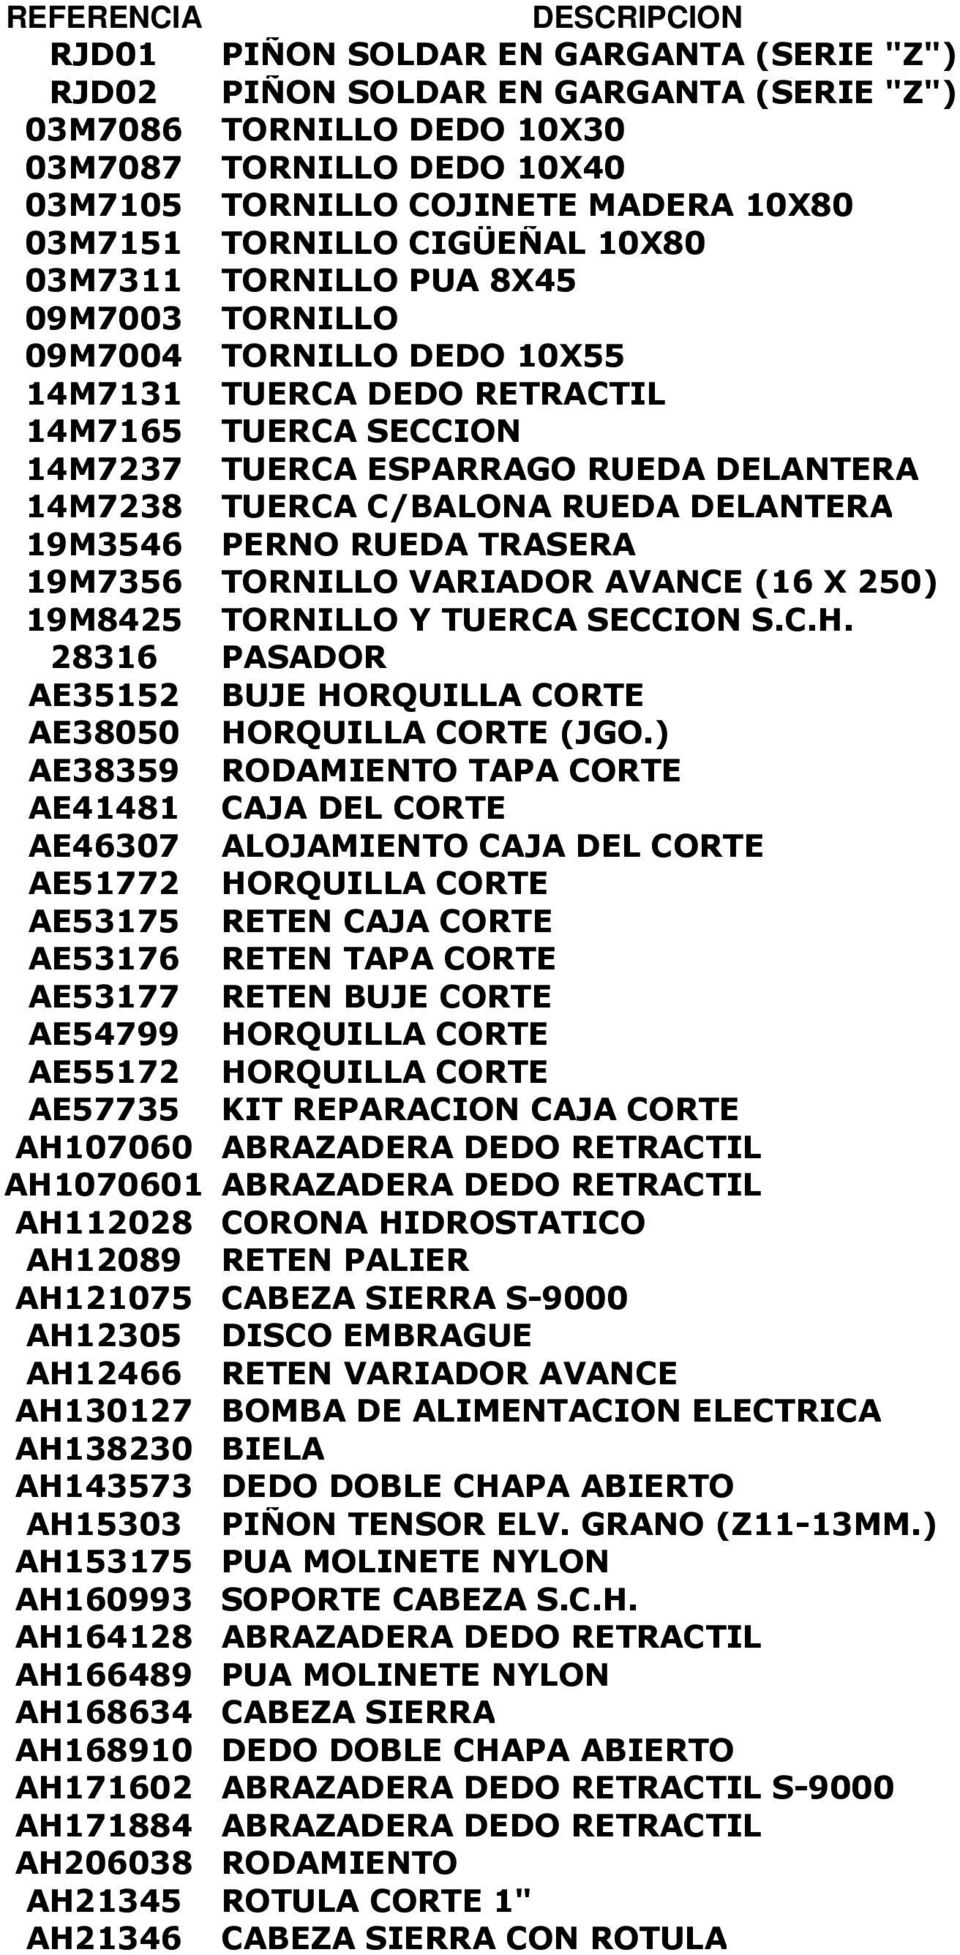 C/BALONA RUEDA DELANTERA 19M3546 PERNO RUEDA TRASERA 19M7356 TORNILLO VARIADOR AVANCE (16 X 250) 19M8425 TORNILLO Y TUERCA SECCION S.C.H.